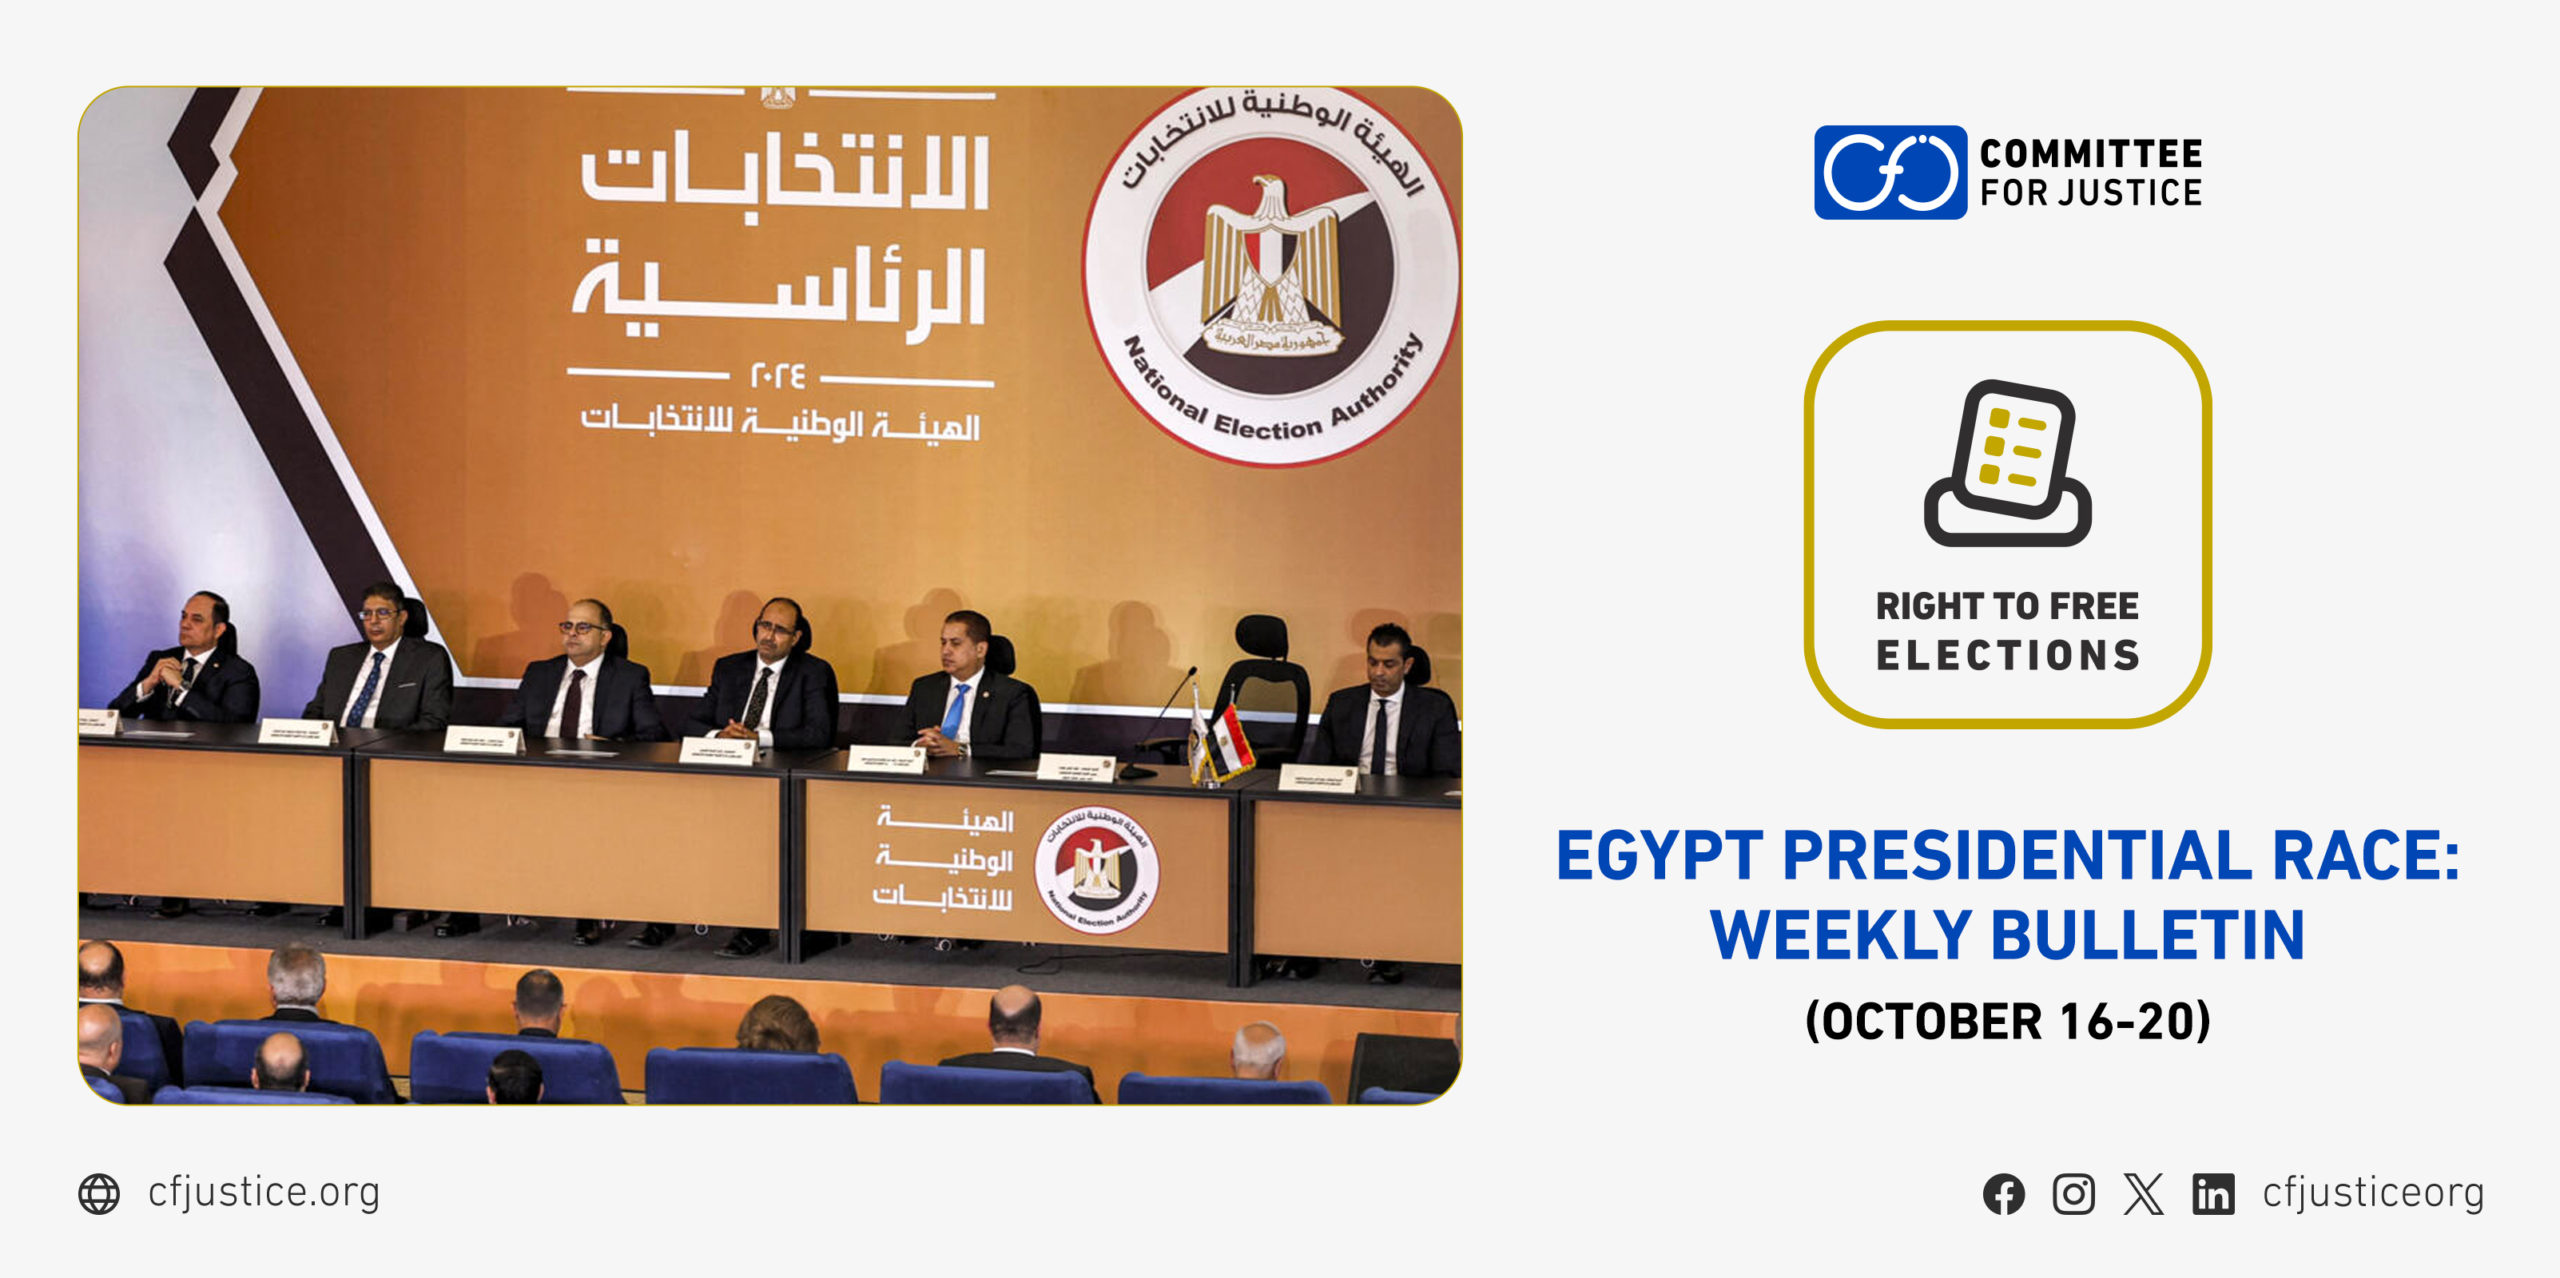 Egypt Presidential Race: Weekly Bulletin (October 16-20)